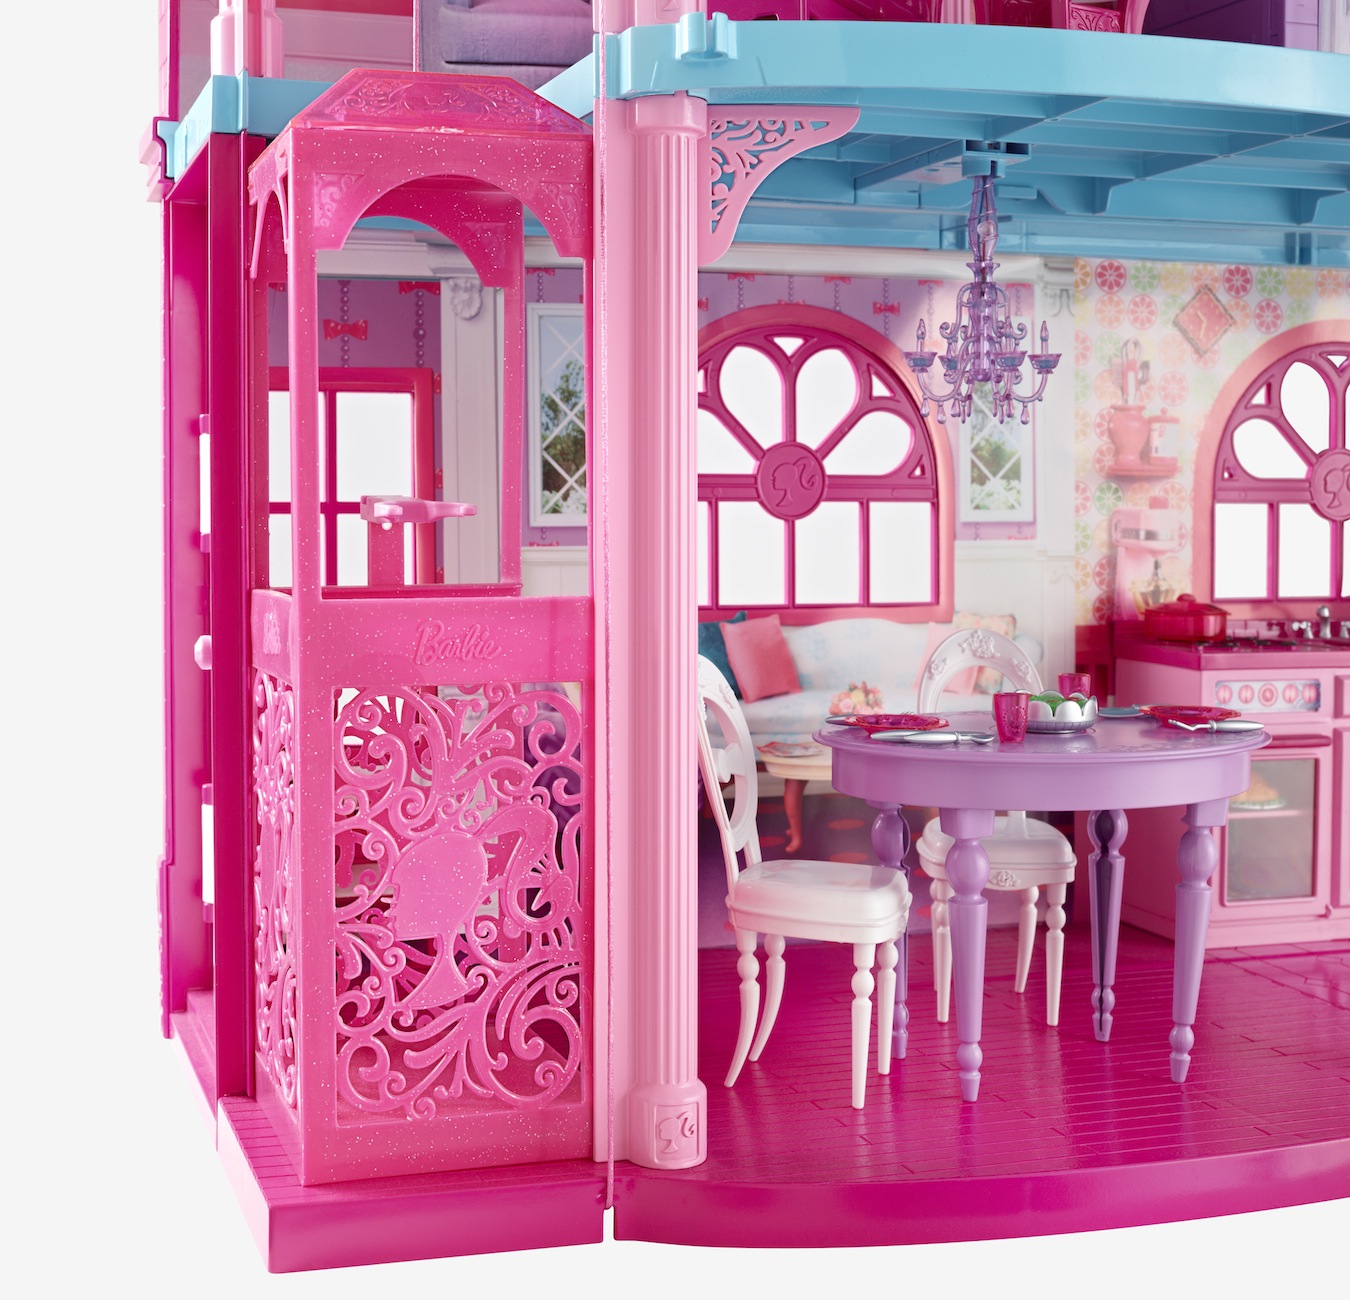 Barbie Lists Her Iconic Malibu Dreamhouse for 25 Million! Trulia's Blog